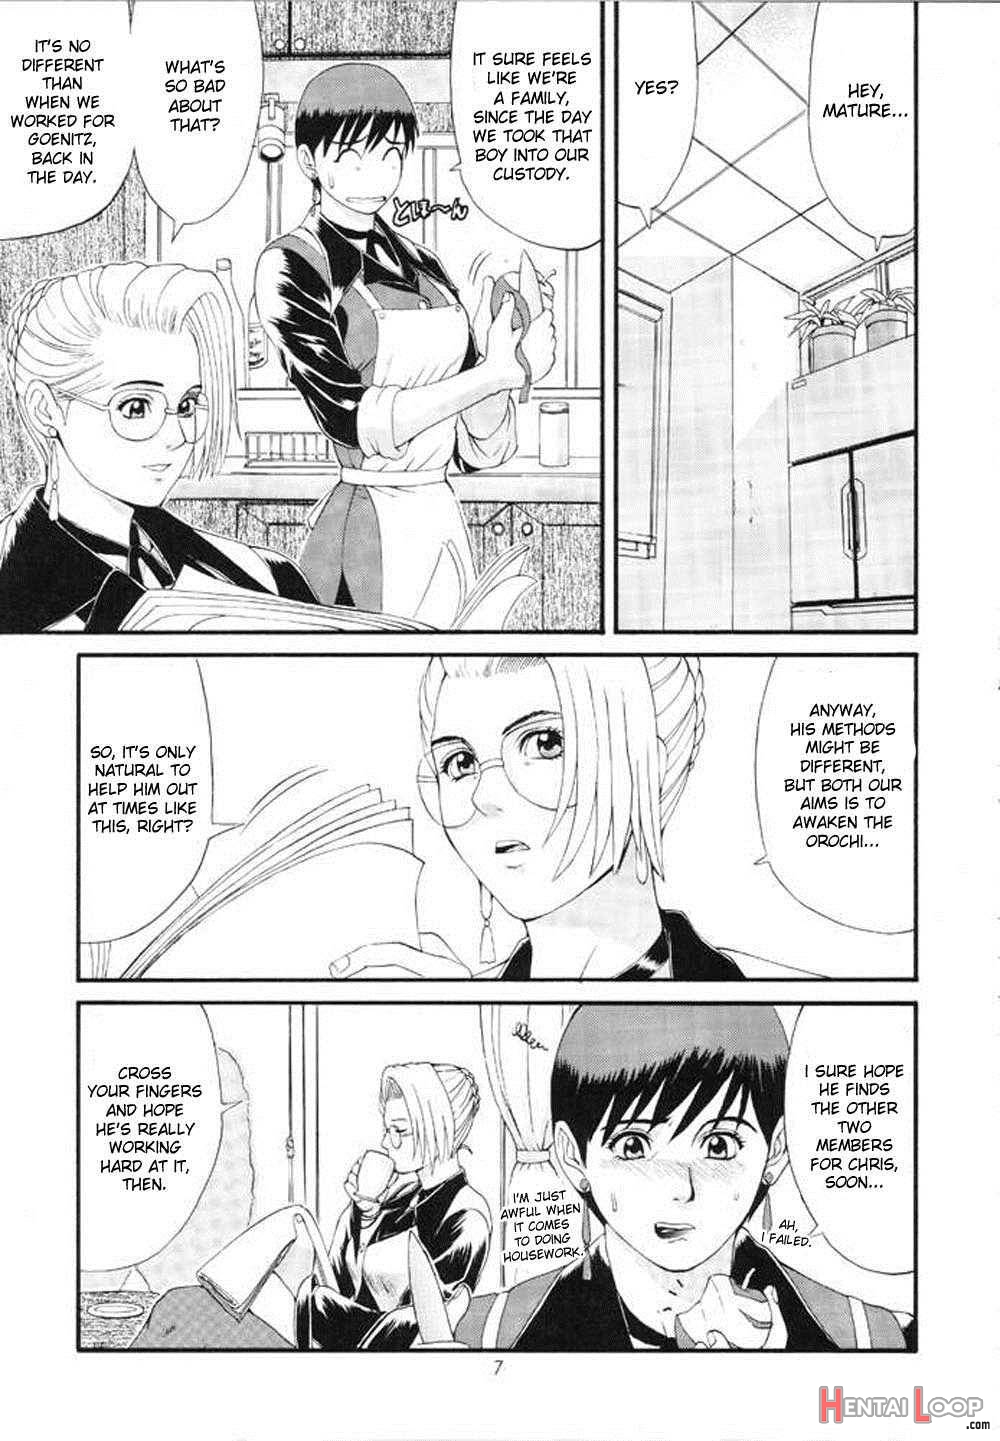 The Yuri&Friends Tokubetsuhen page 6